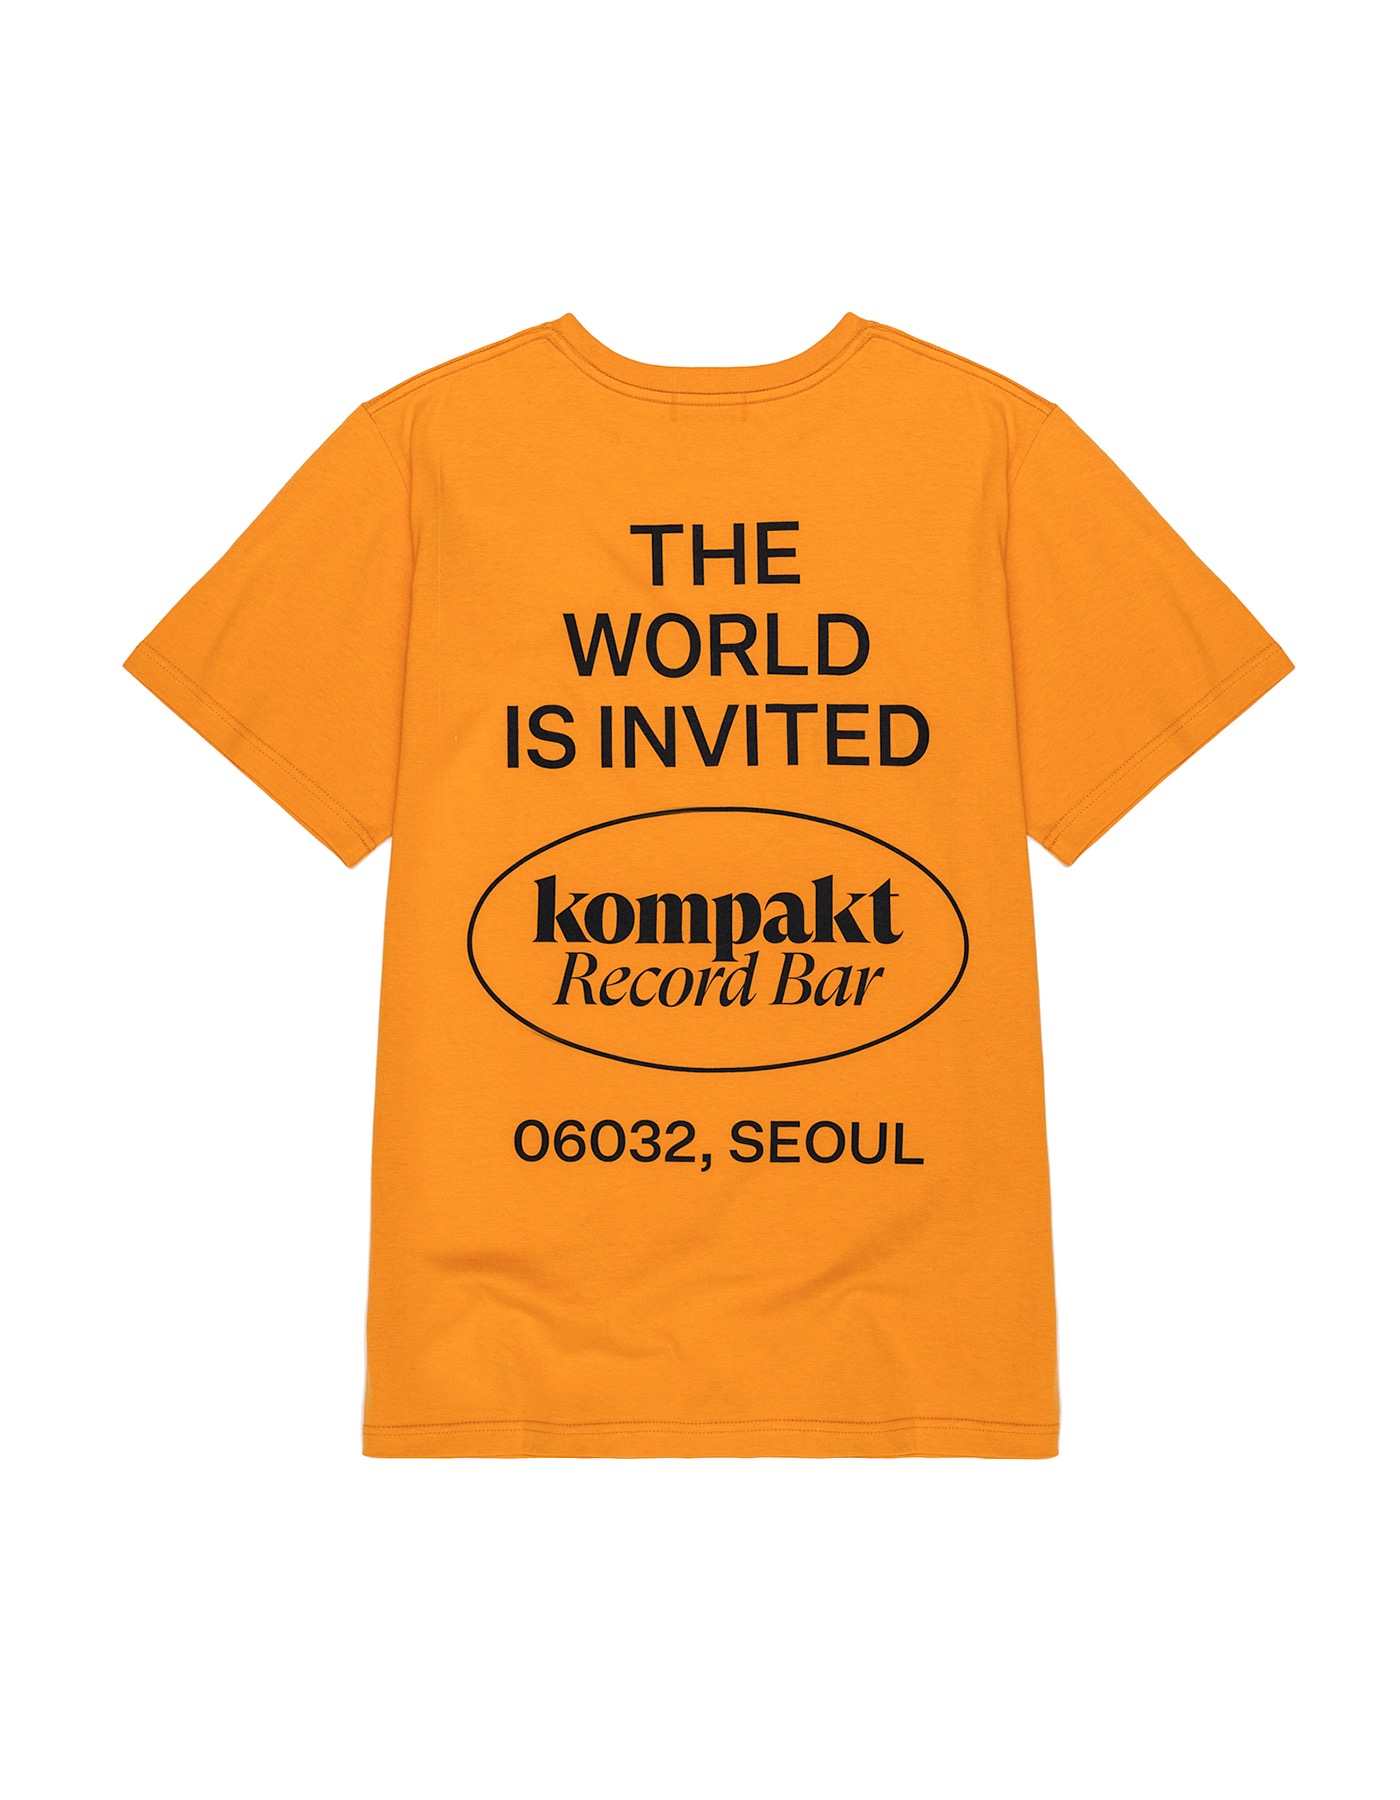 The World is Invited T-Shirt - Orange